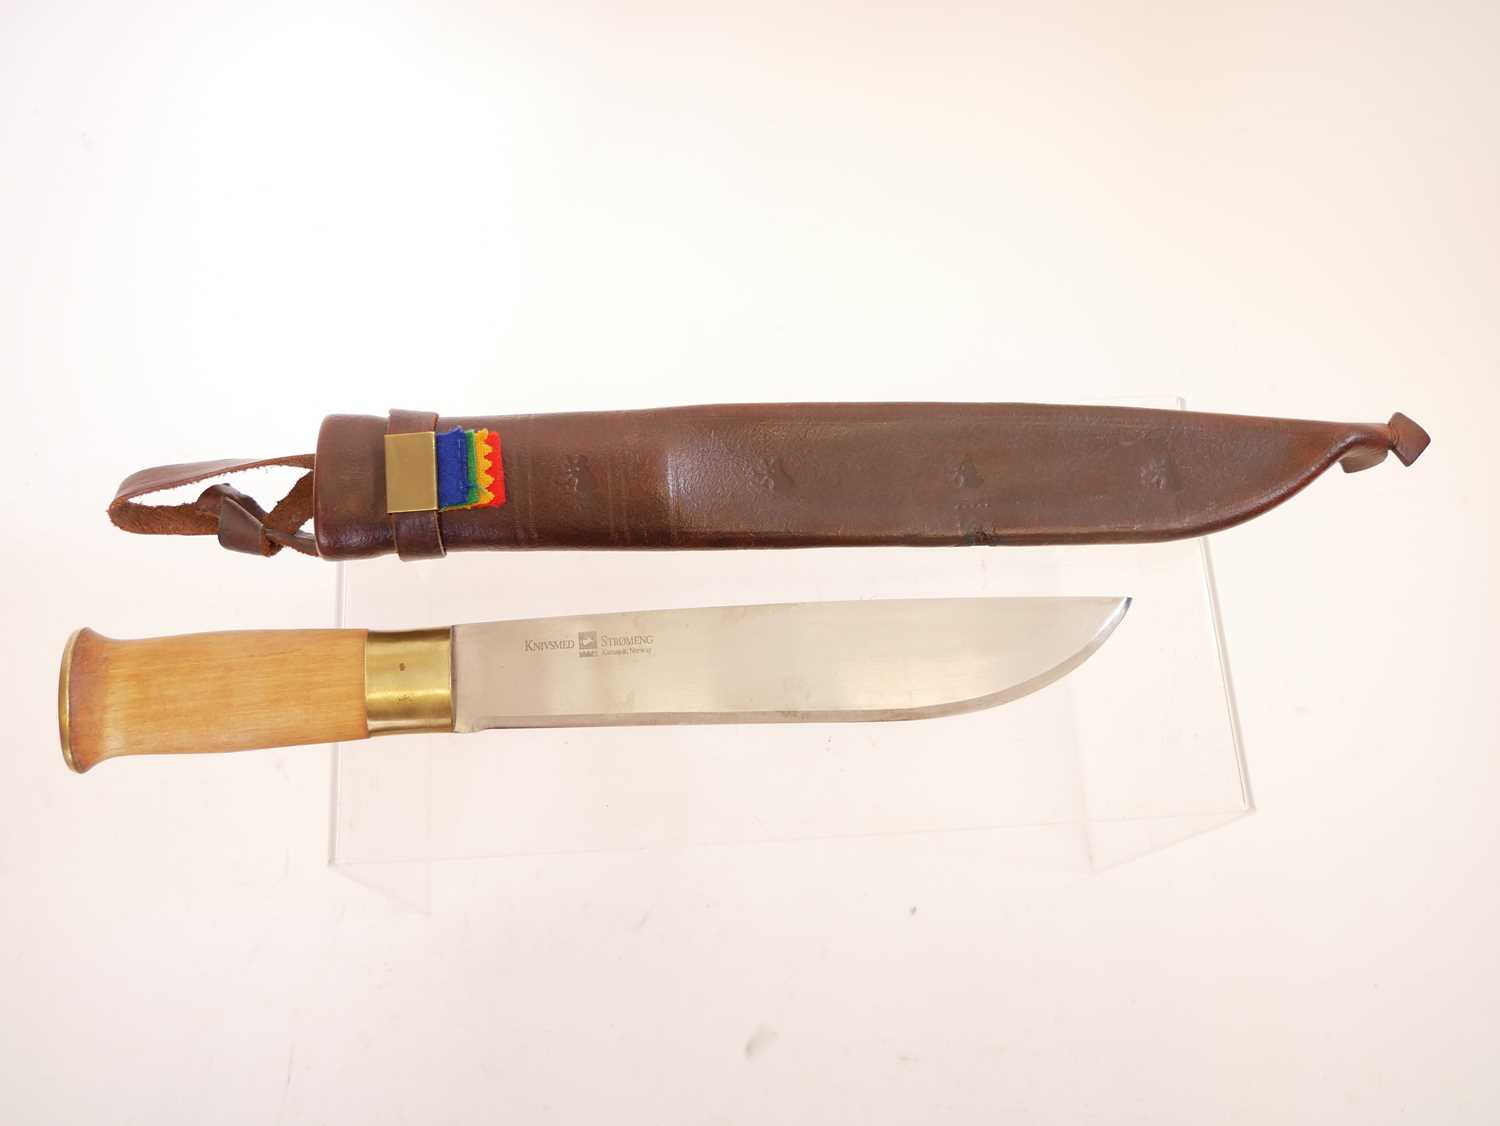 Knivsmed hunting knife, 9inch blade marked 'Knivsmed Stromeng Karasjok, Norway' with leather - Bild 7 aus 7